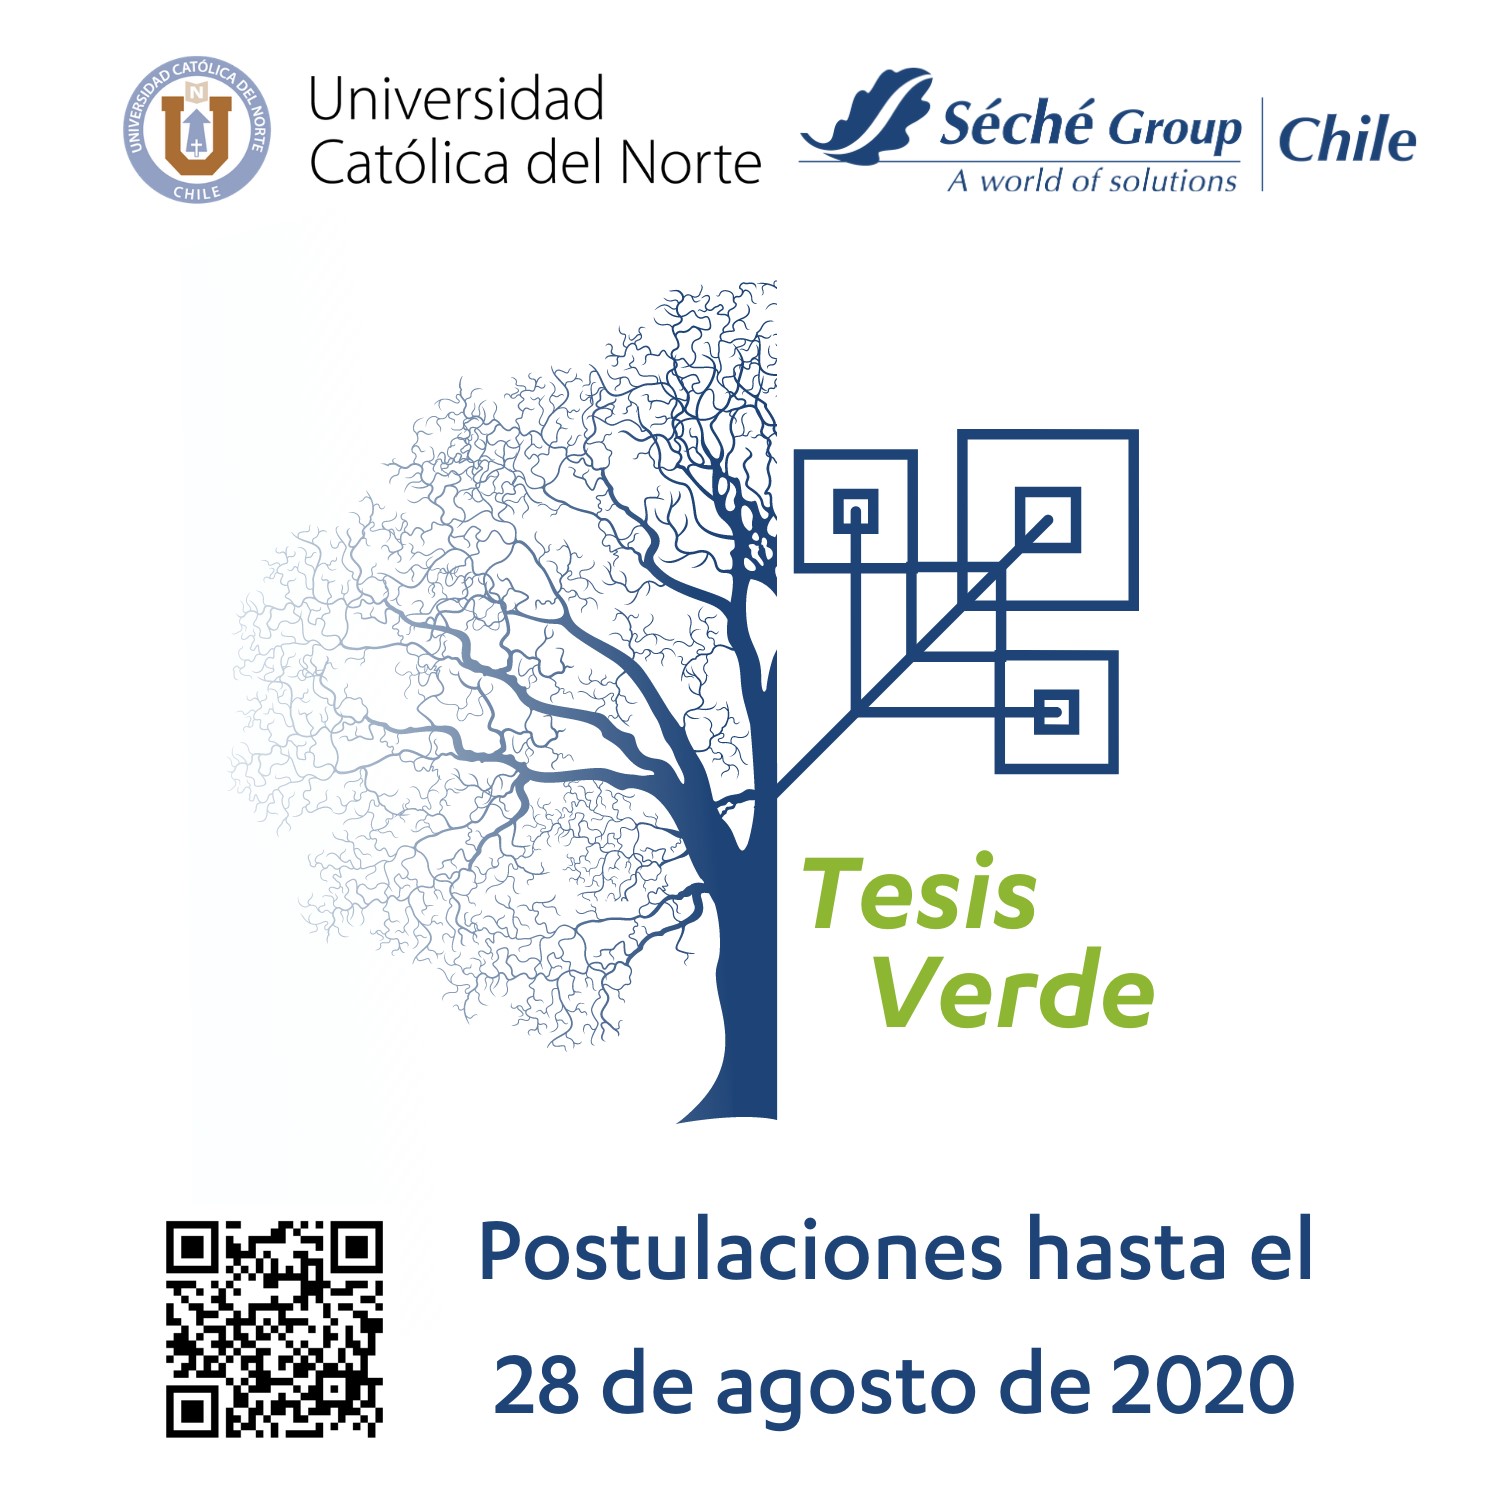 Universidad Católica y Séché Group Chile